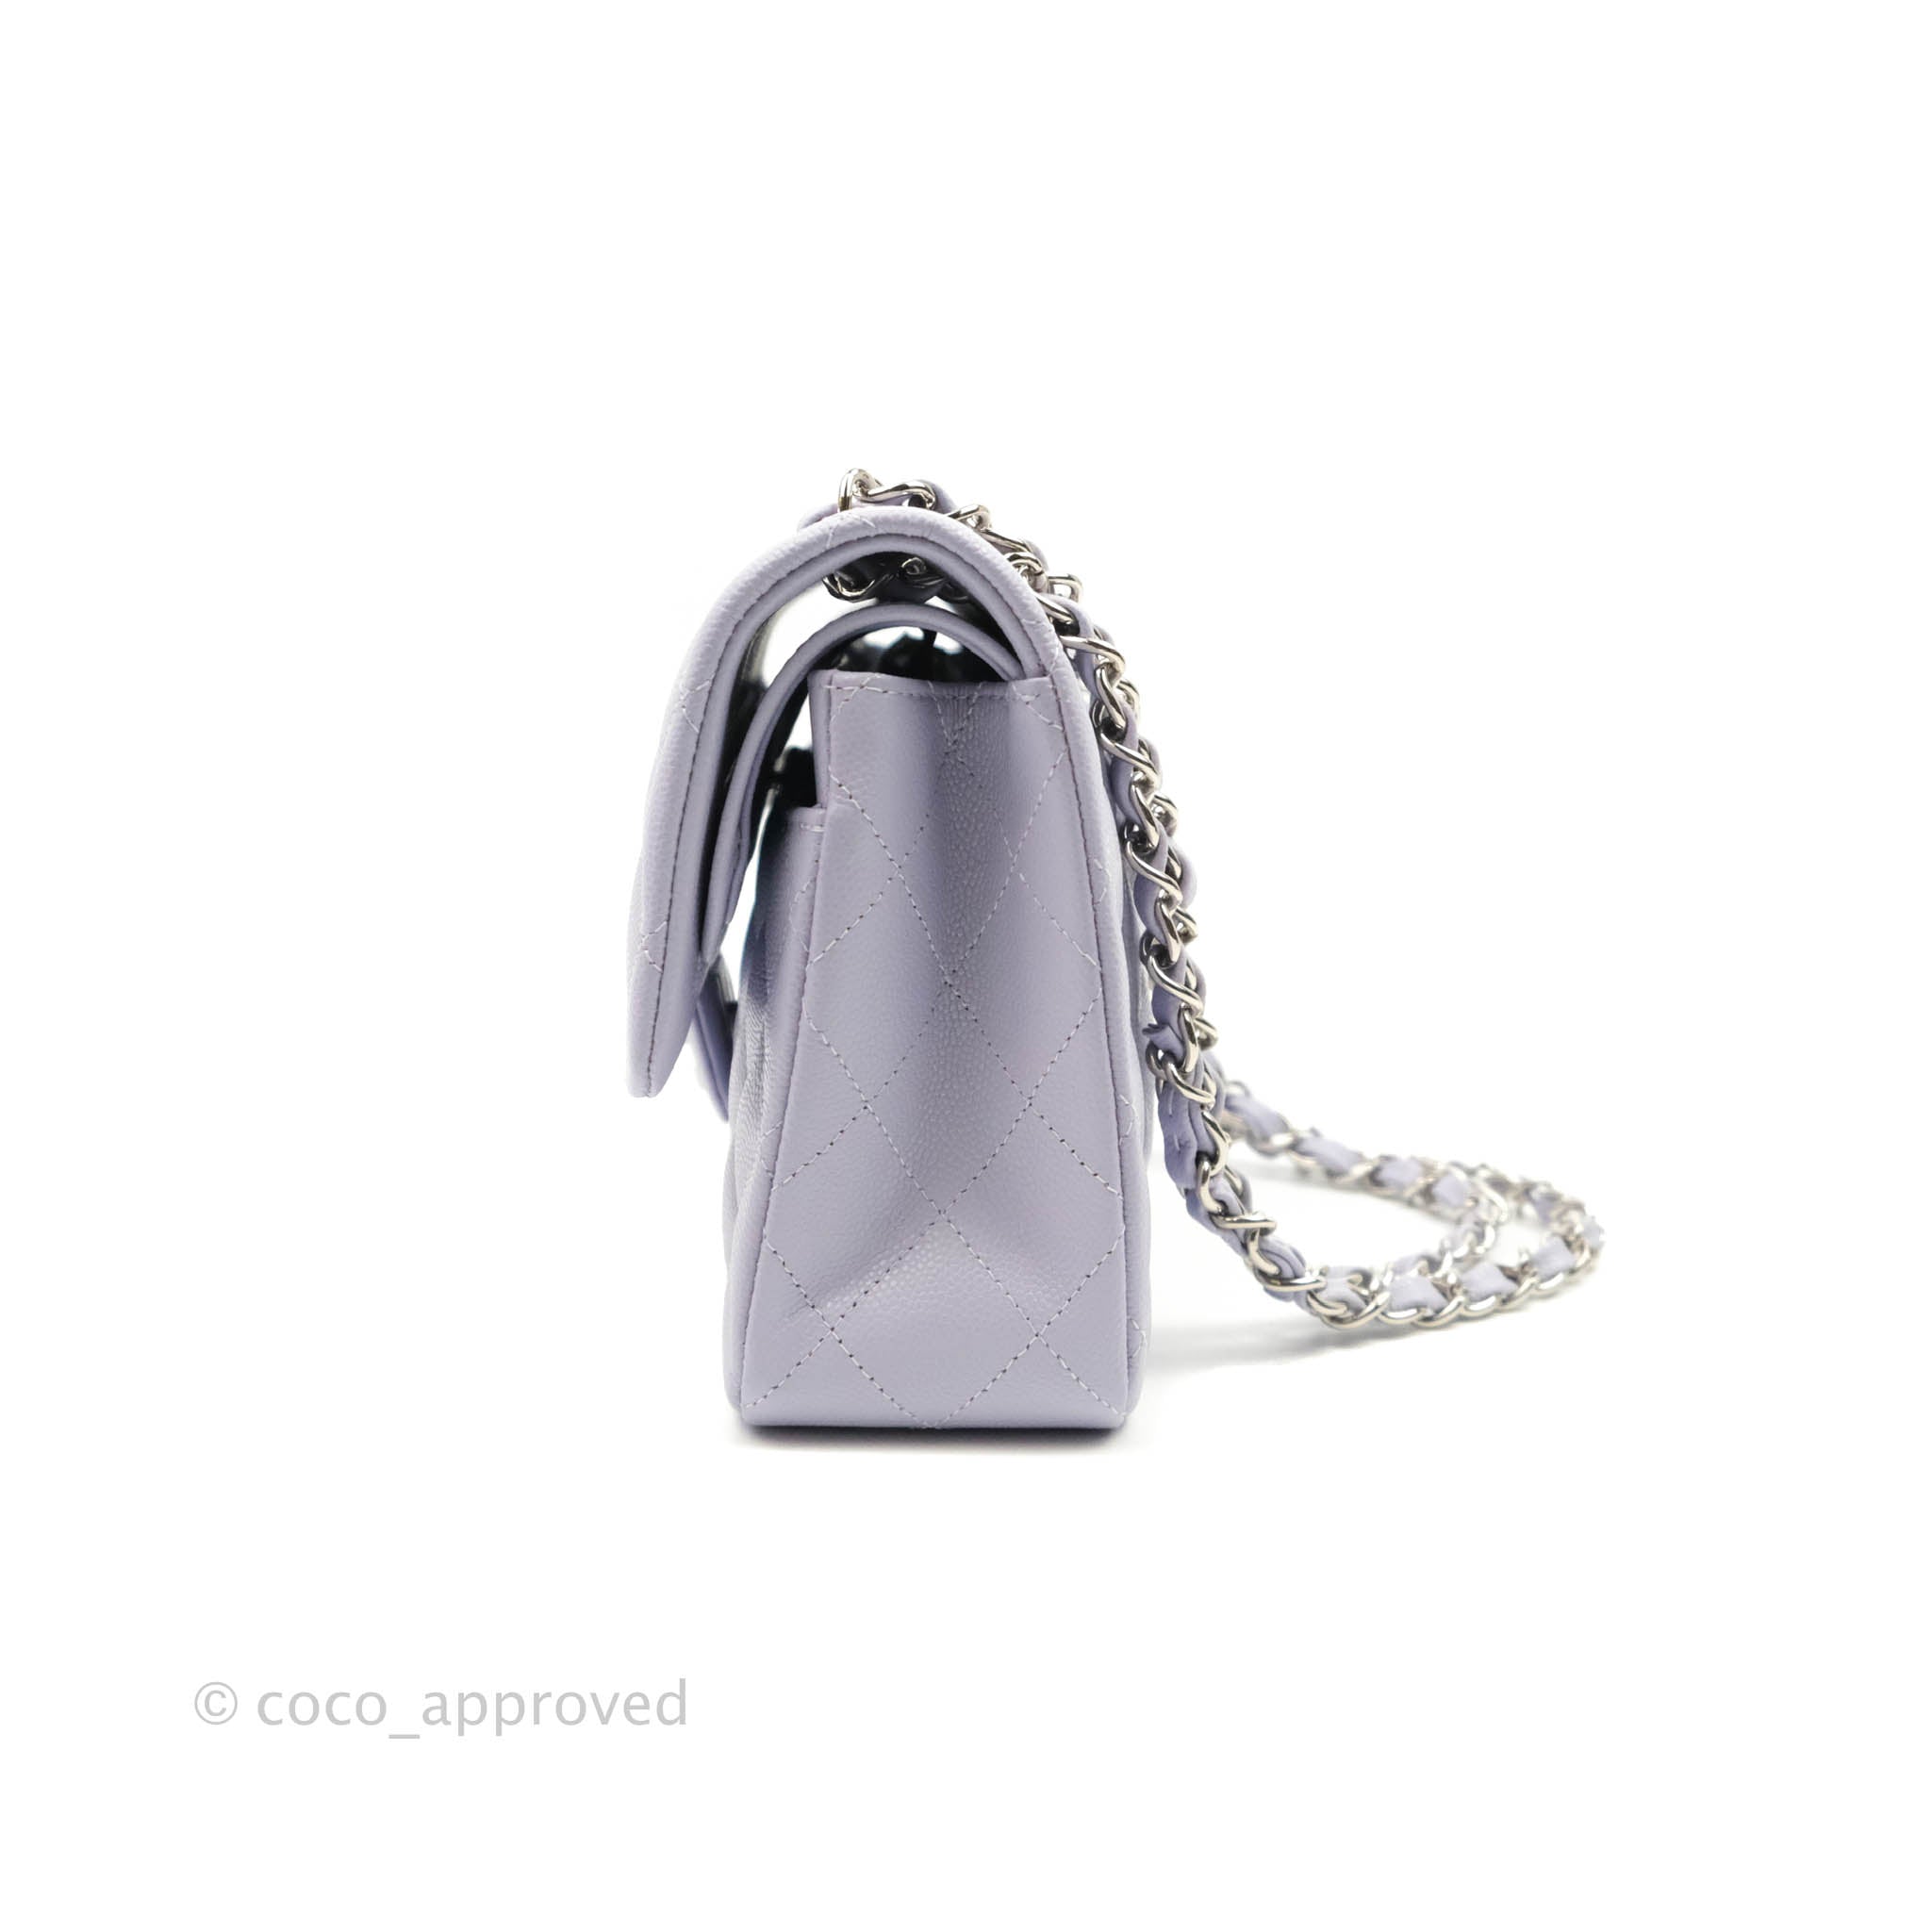 Chanel 22 Small Handbag Shiny Calfskin & Gold-Tone Metal